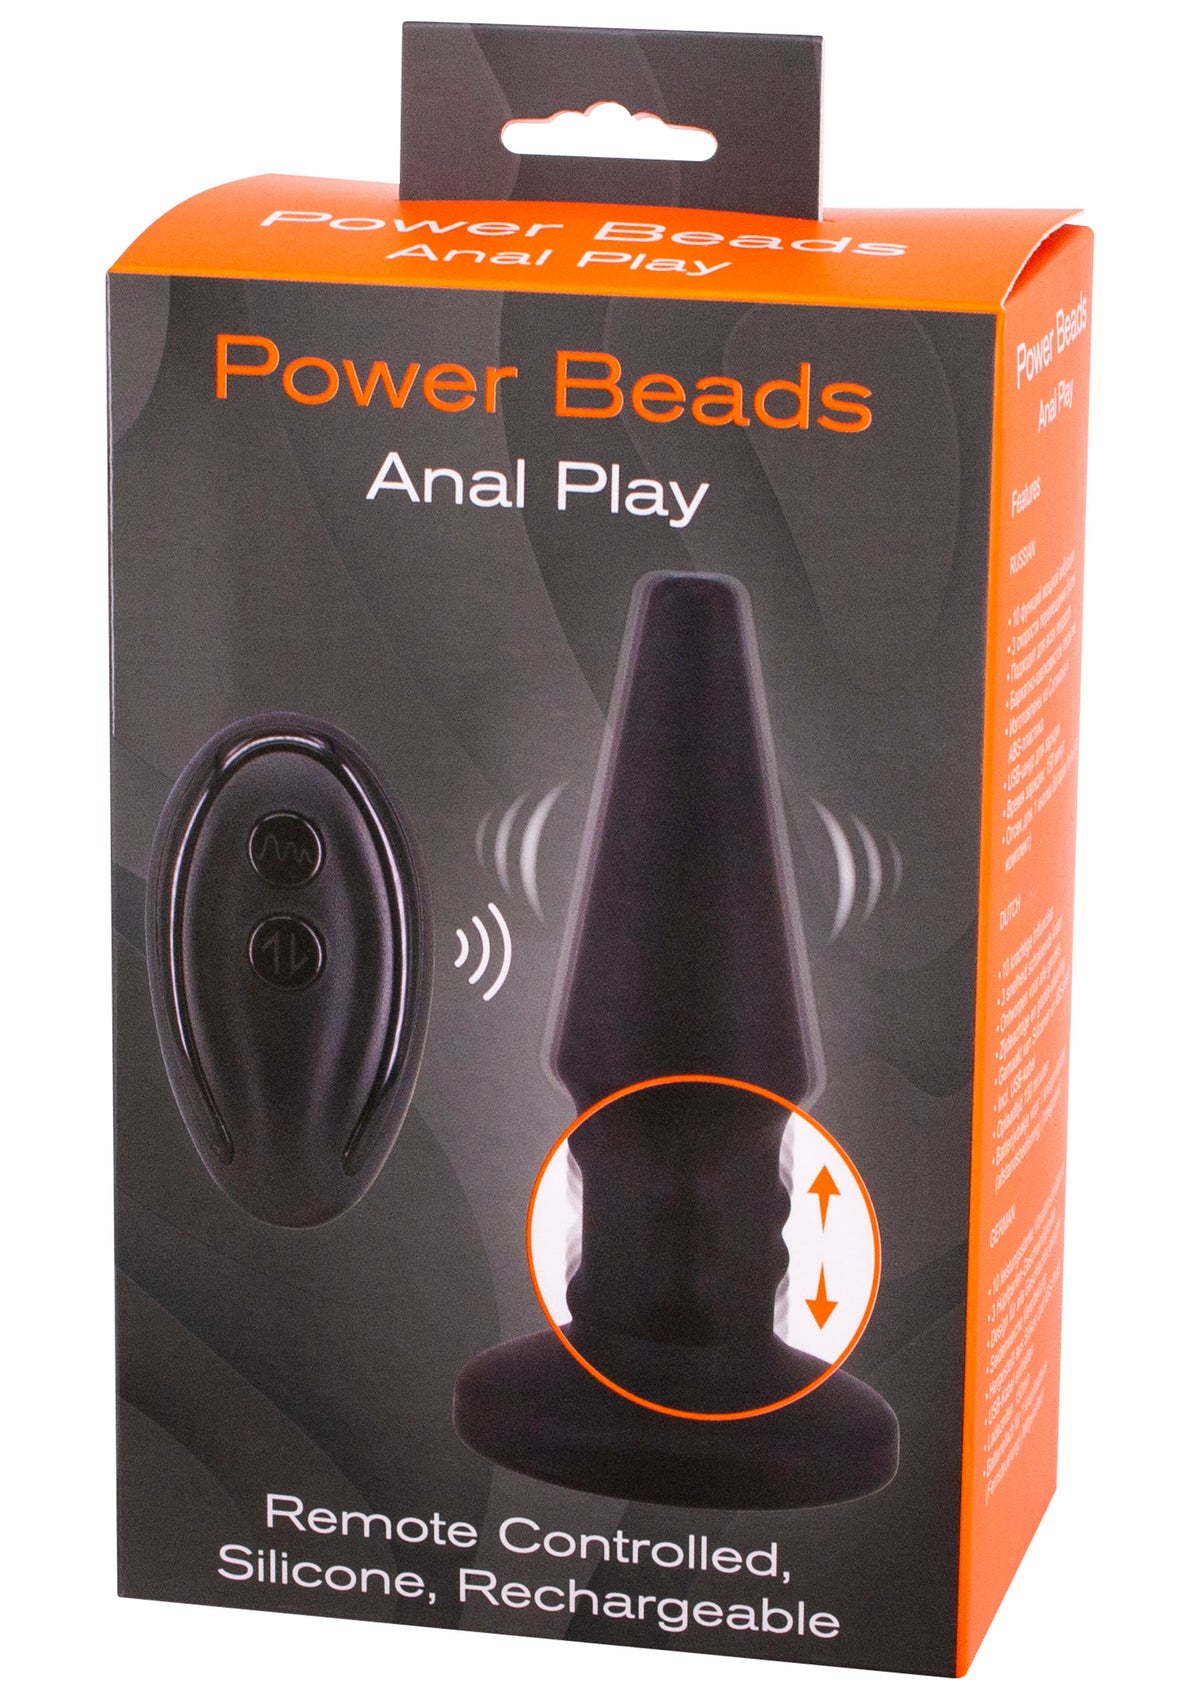 Power Beads Anal Play